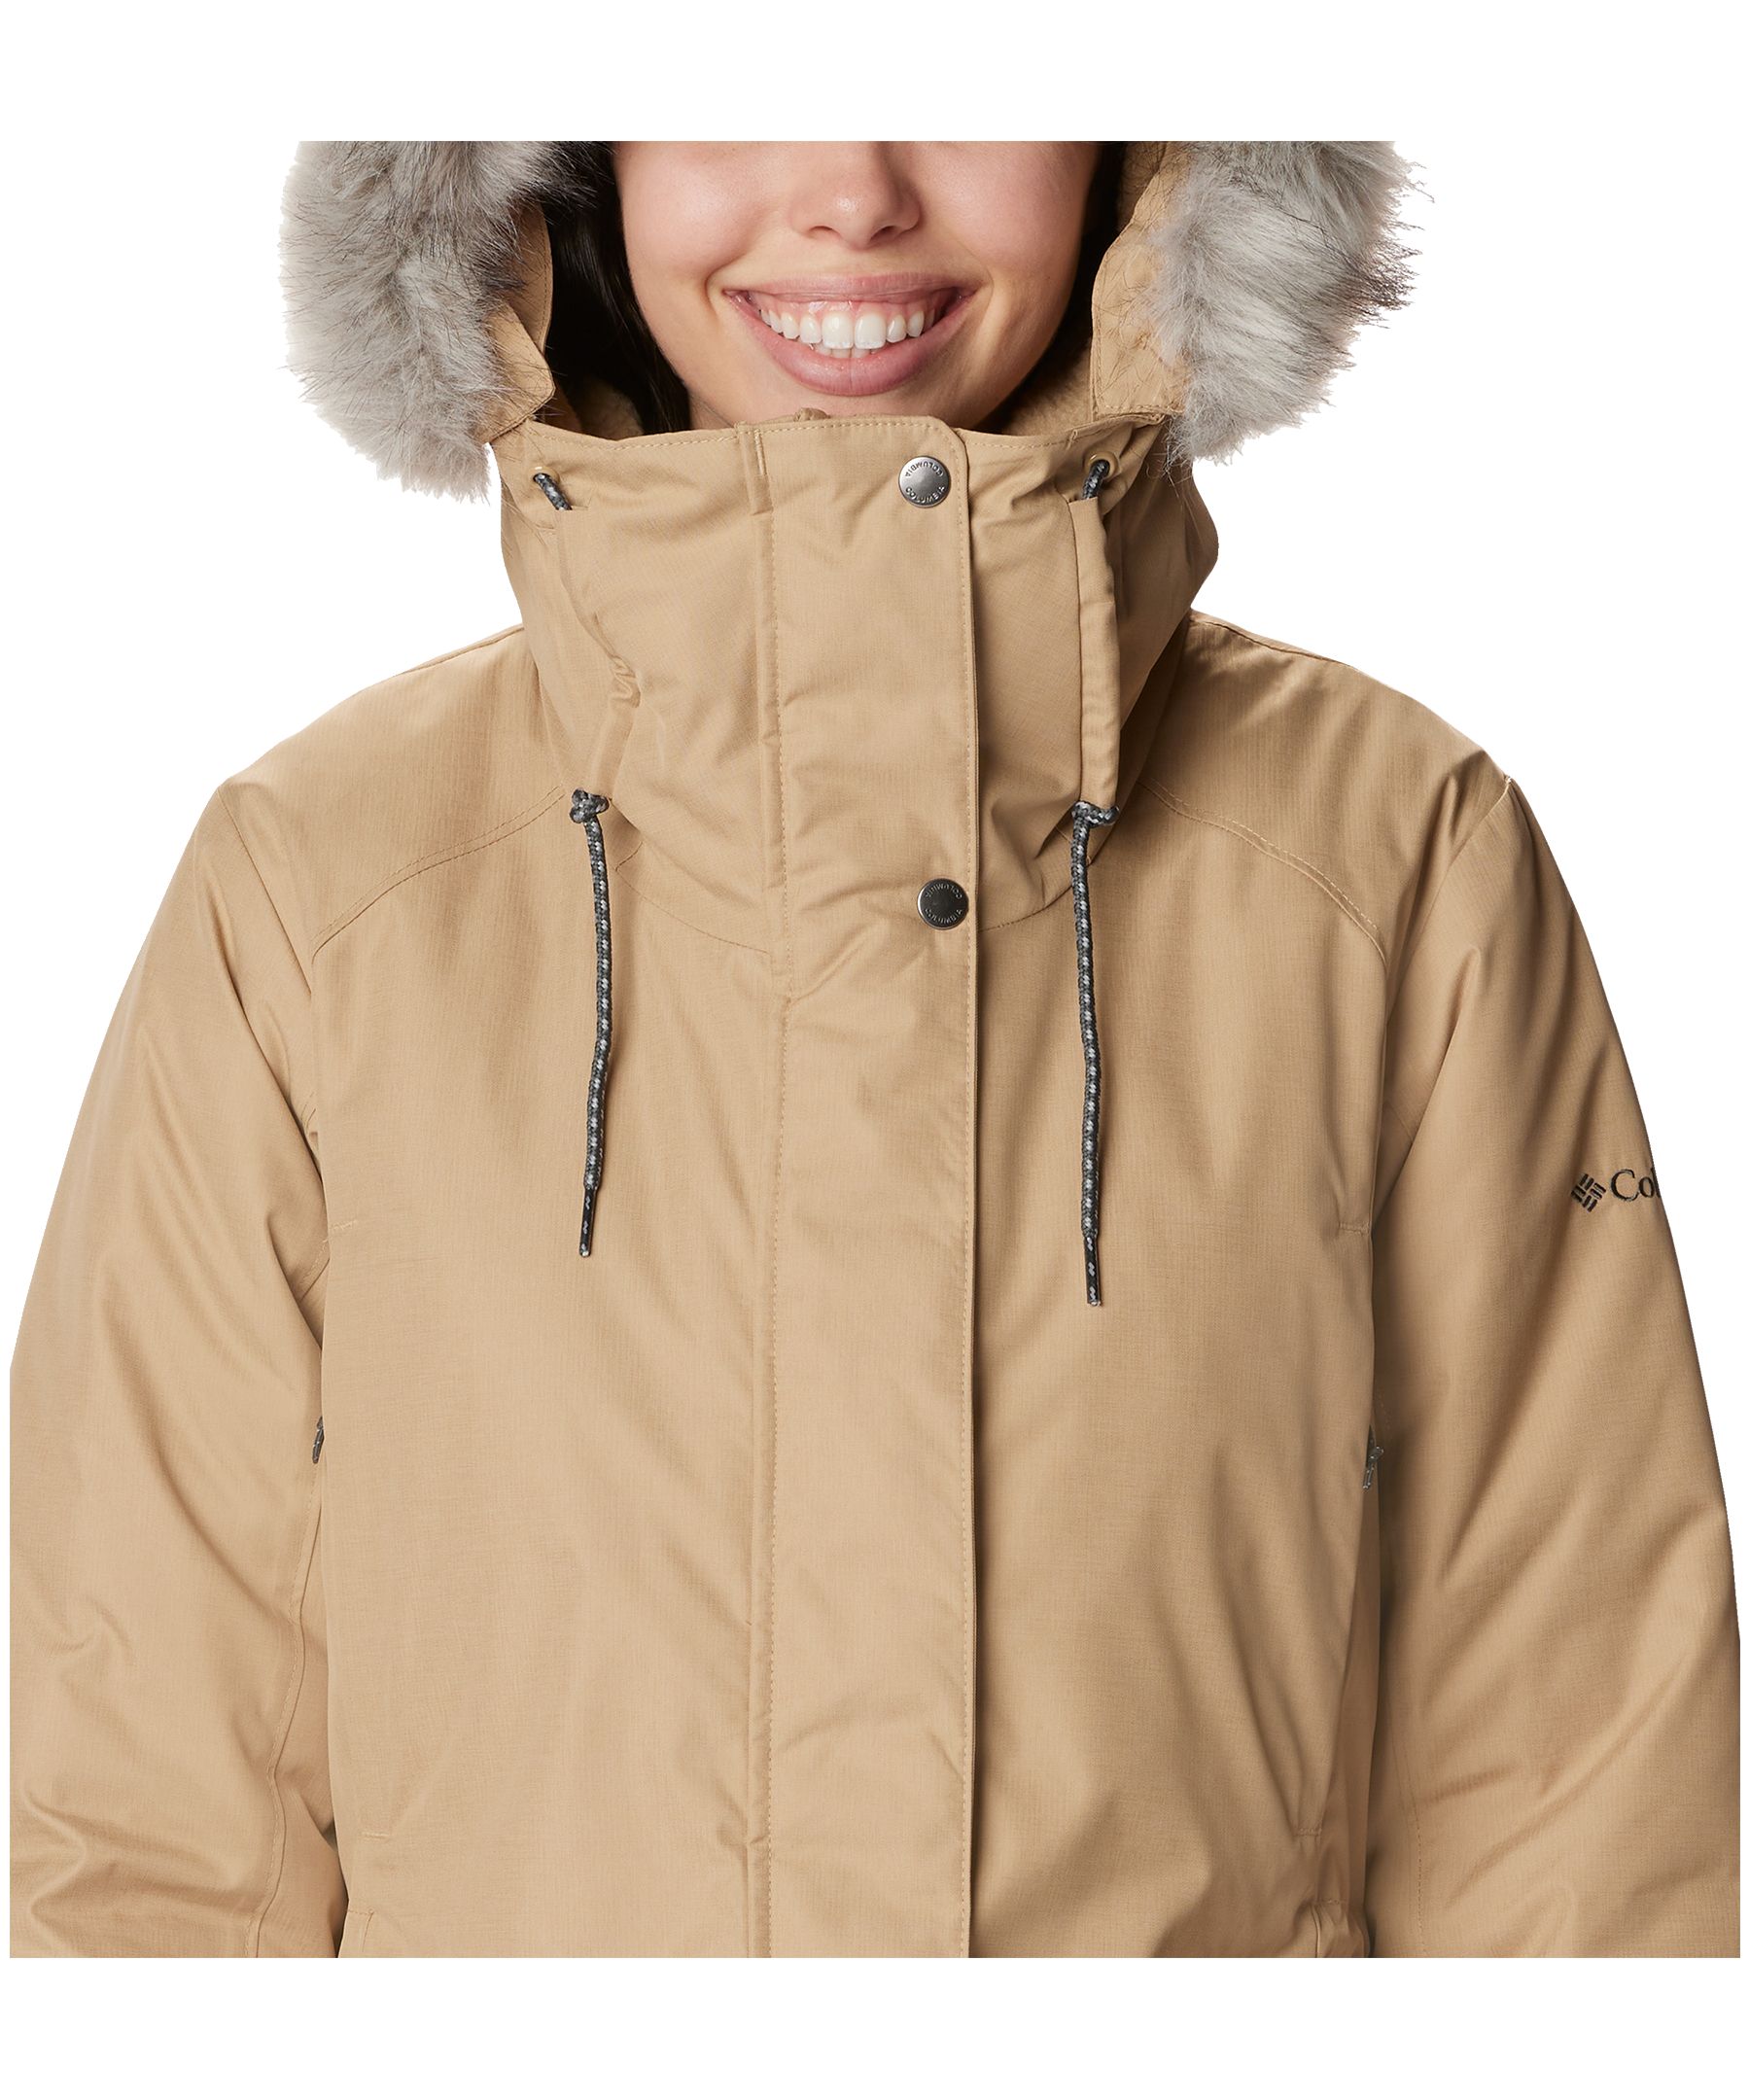 Columbia Women's Suttle Mountain II Omni-Heat Waterproof Insulated Jacket